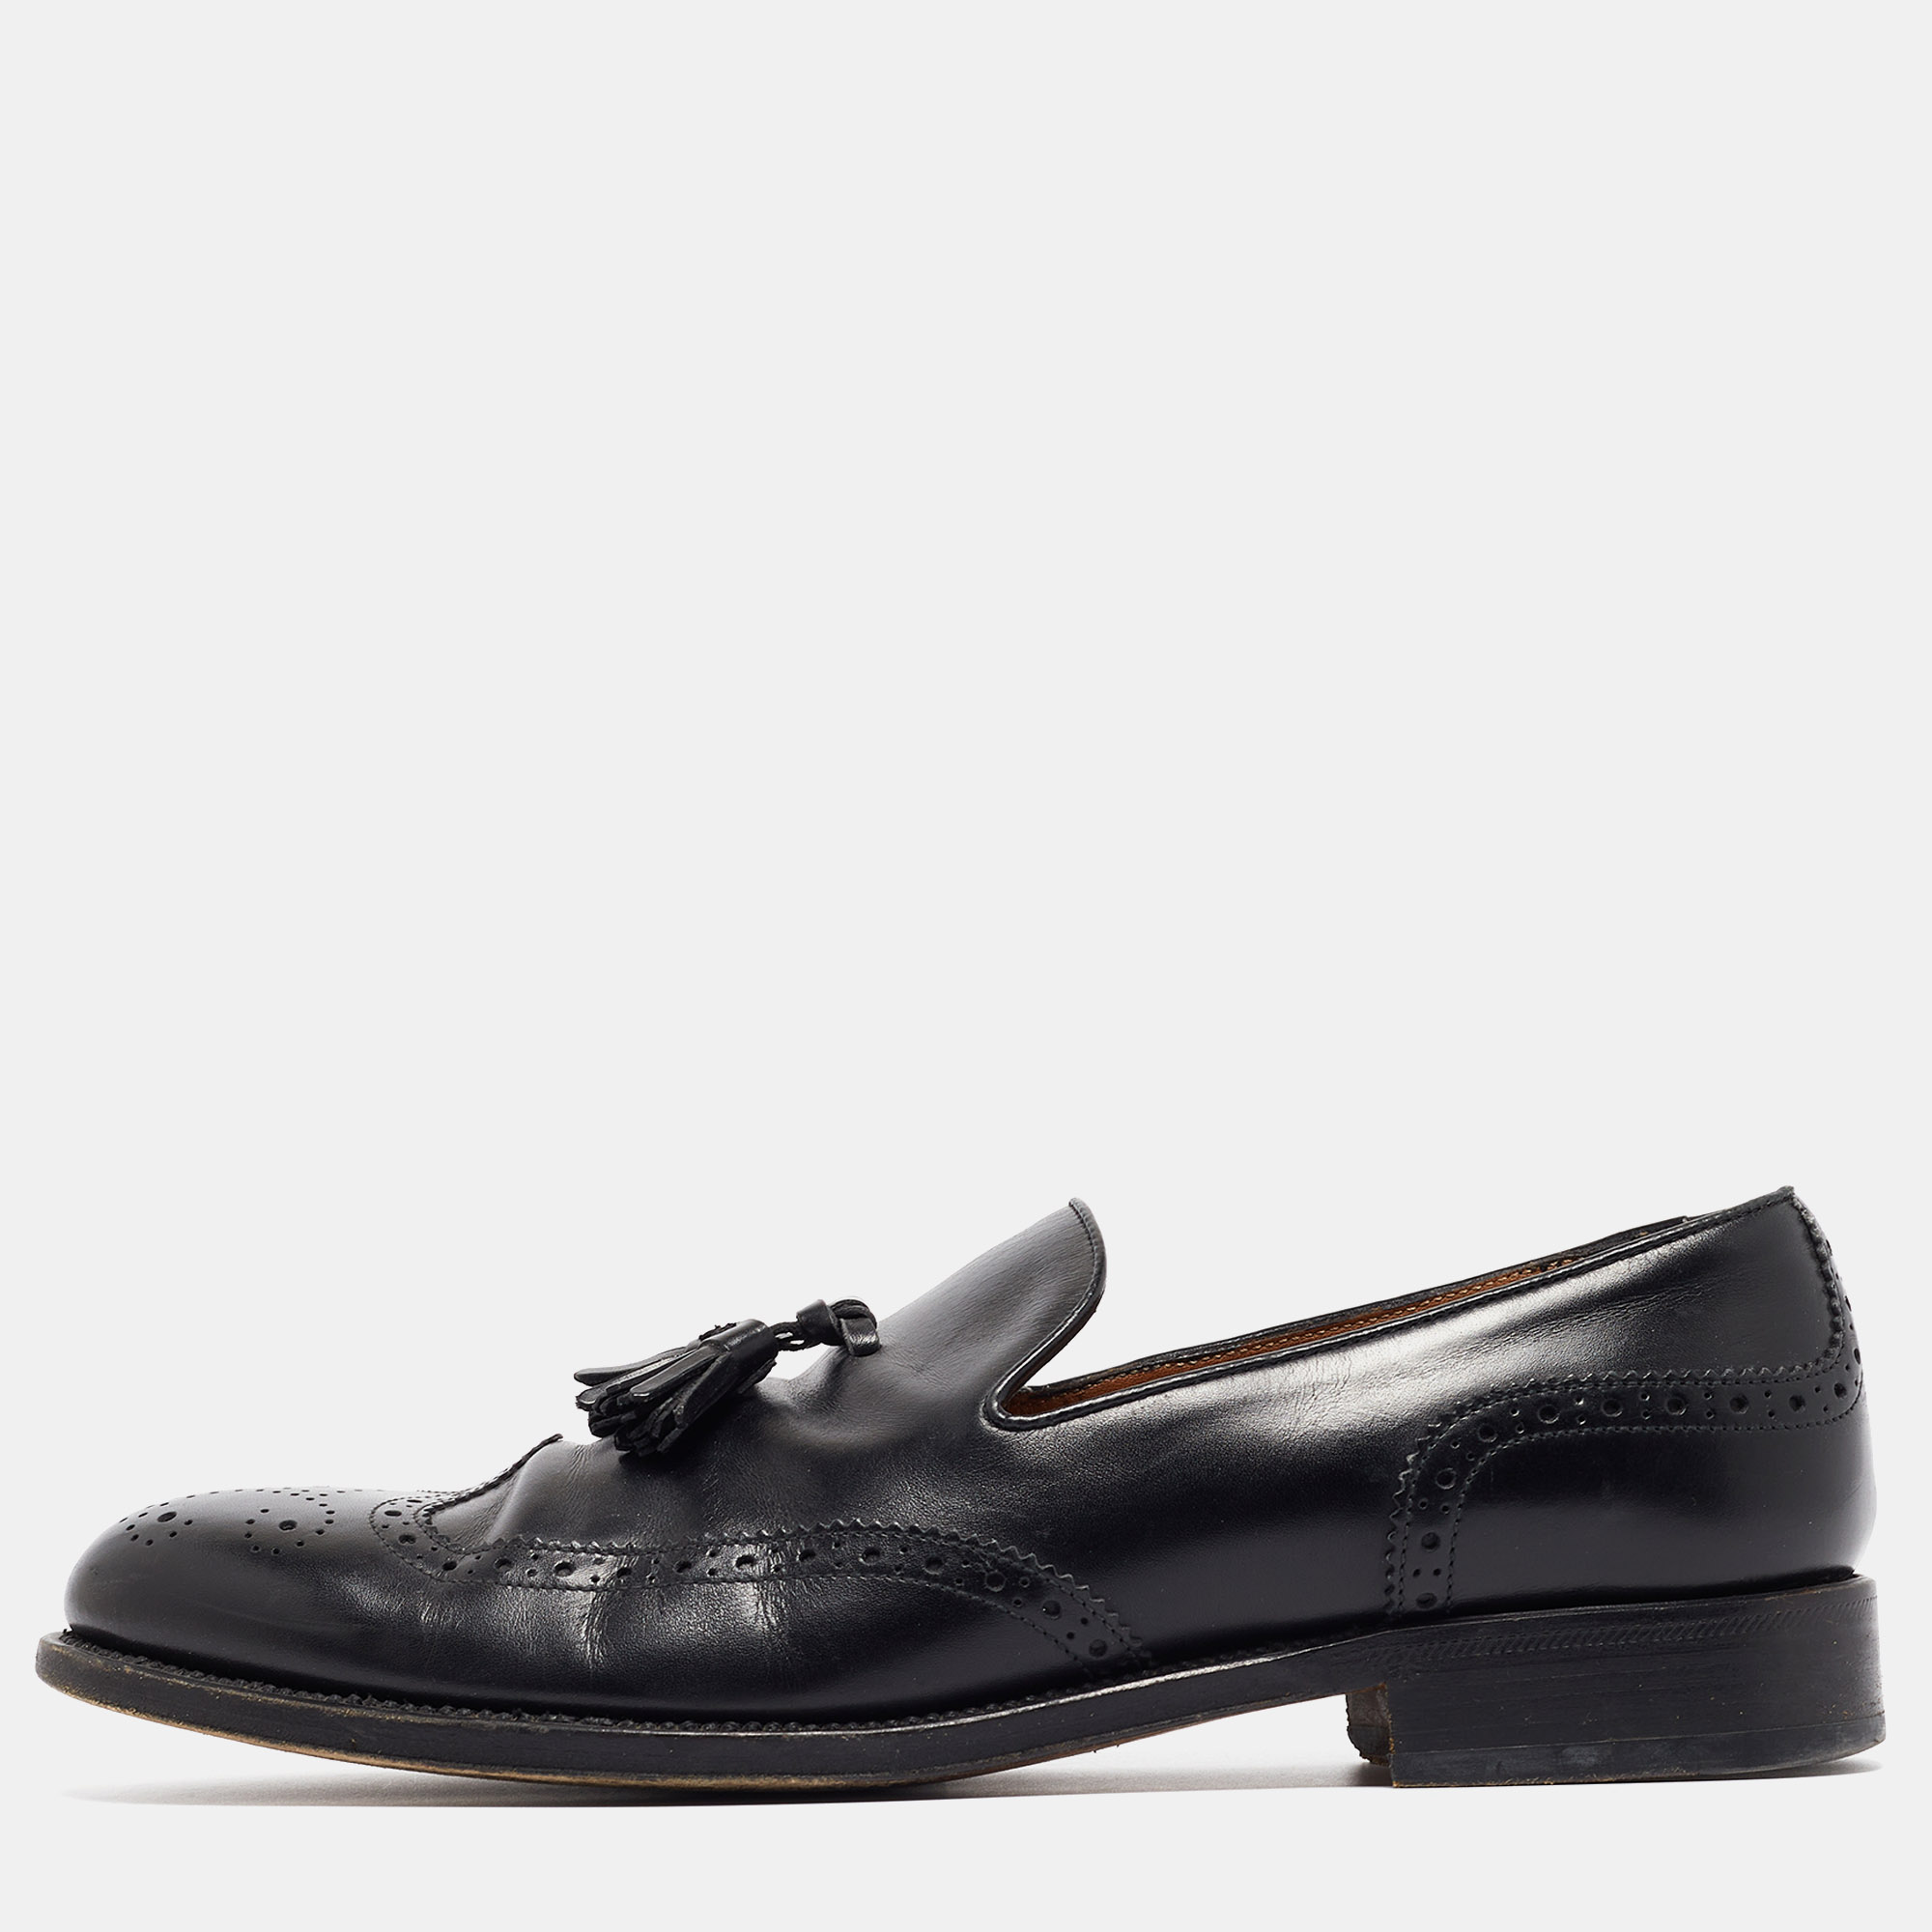 Giorgio Armani Black Leather Slip On Loafers Size 41